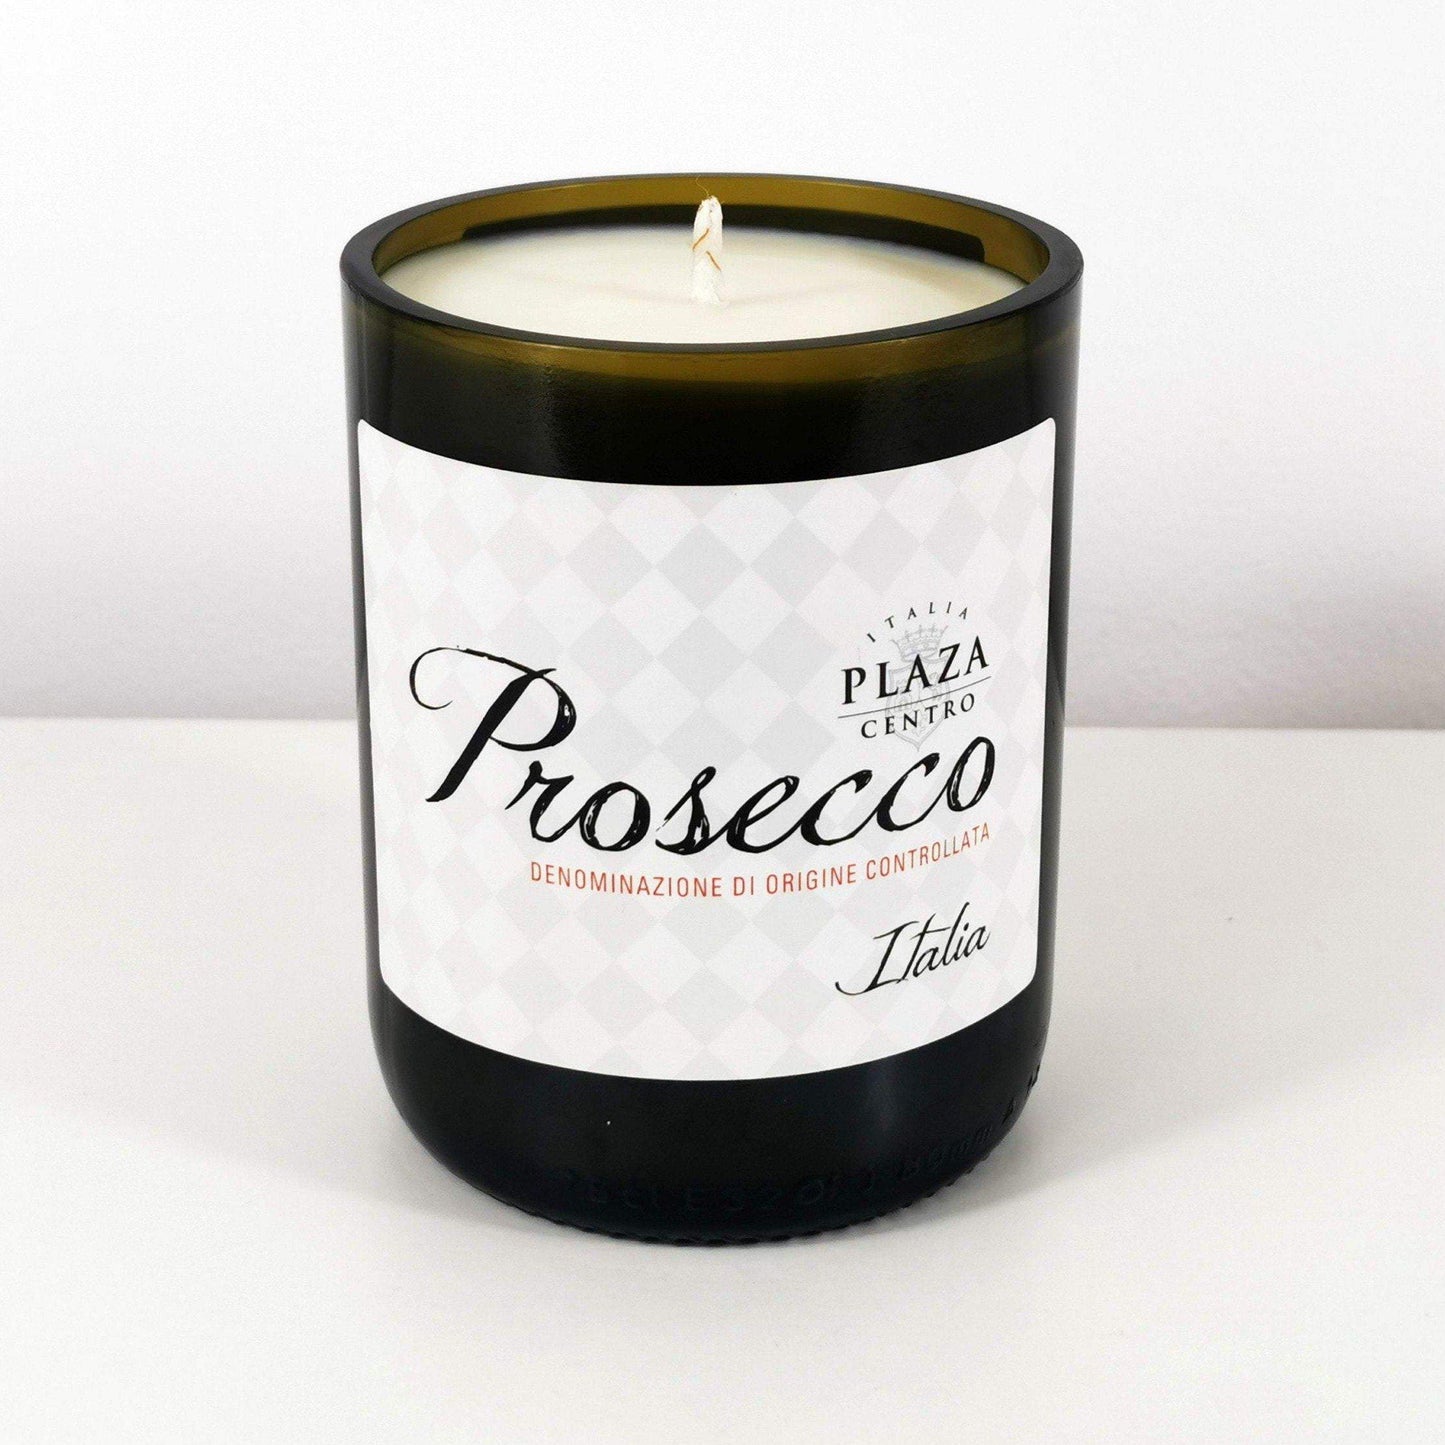 Plaza Centro Prosecco Bottle Candle-Wine & Prosecco Bottle Candles-Adhock Homeware